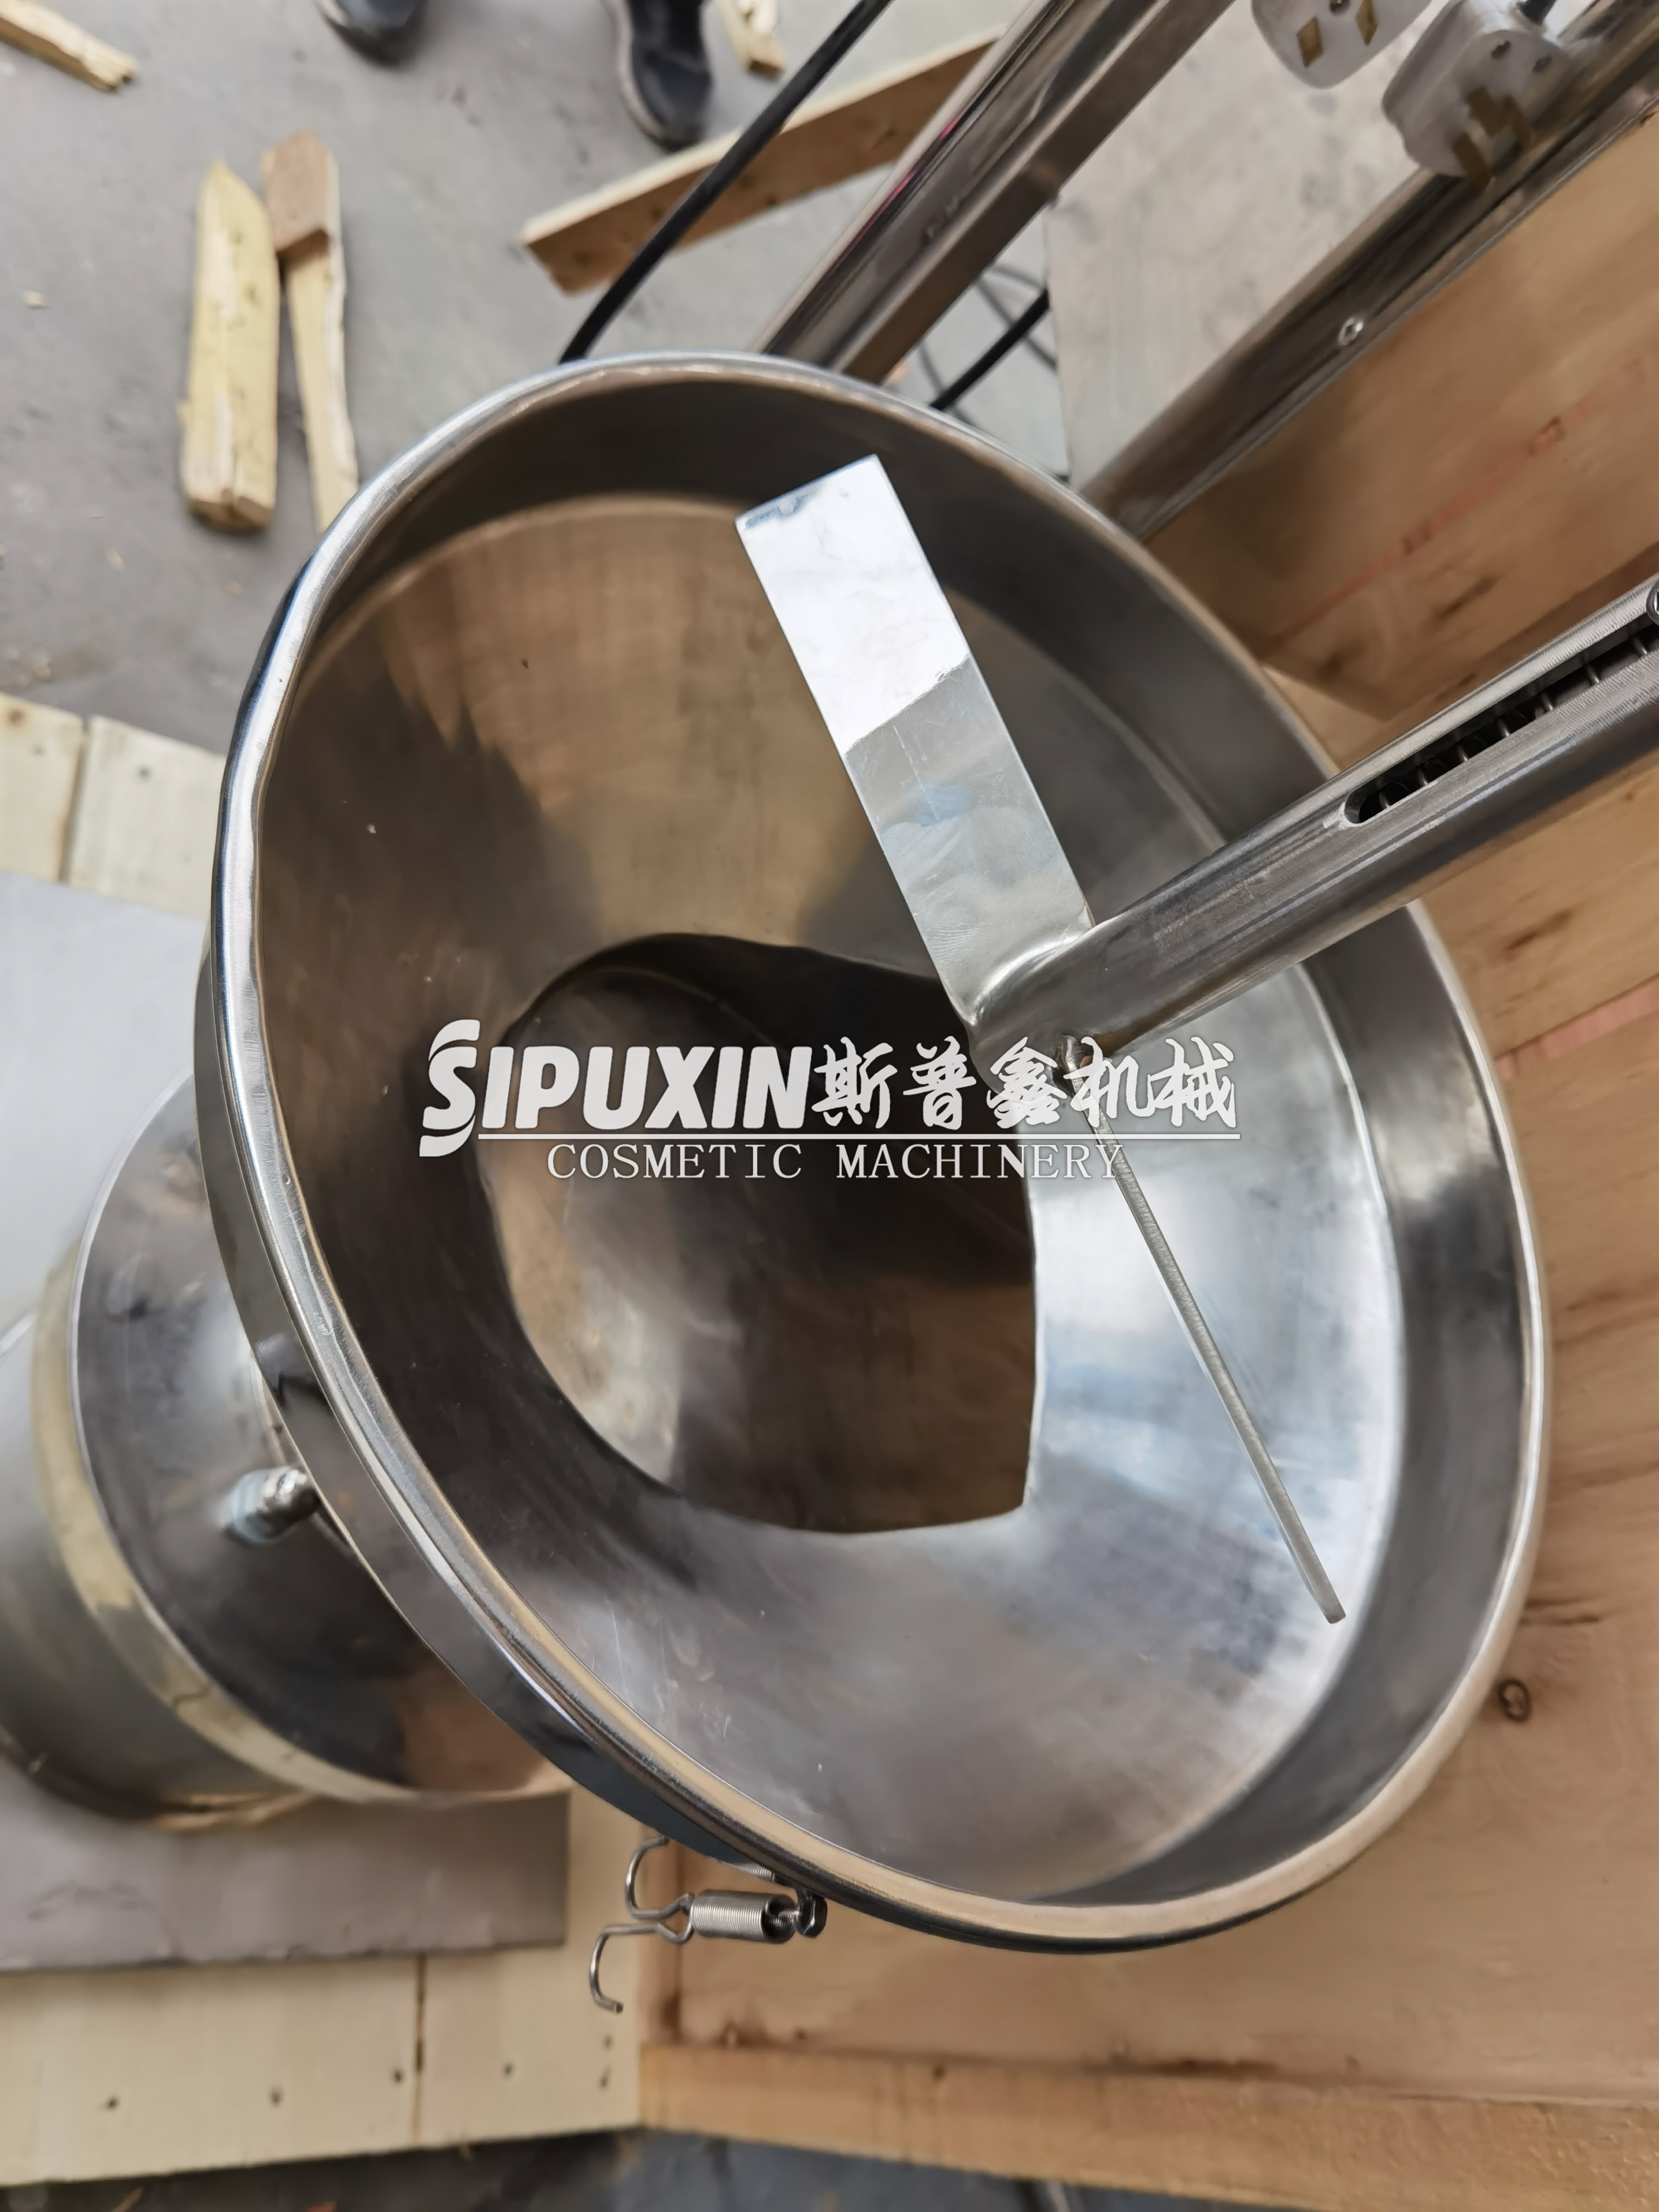 Sipuxin Foundation Sieve Machine para polvo cosmético